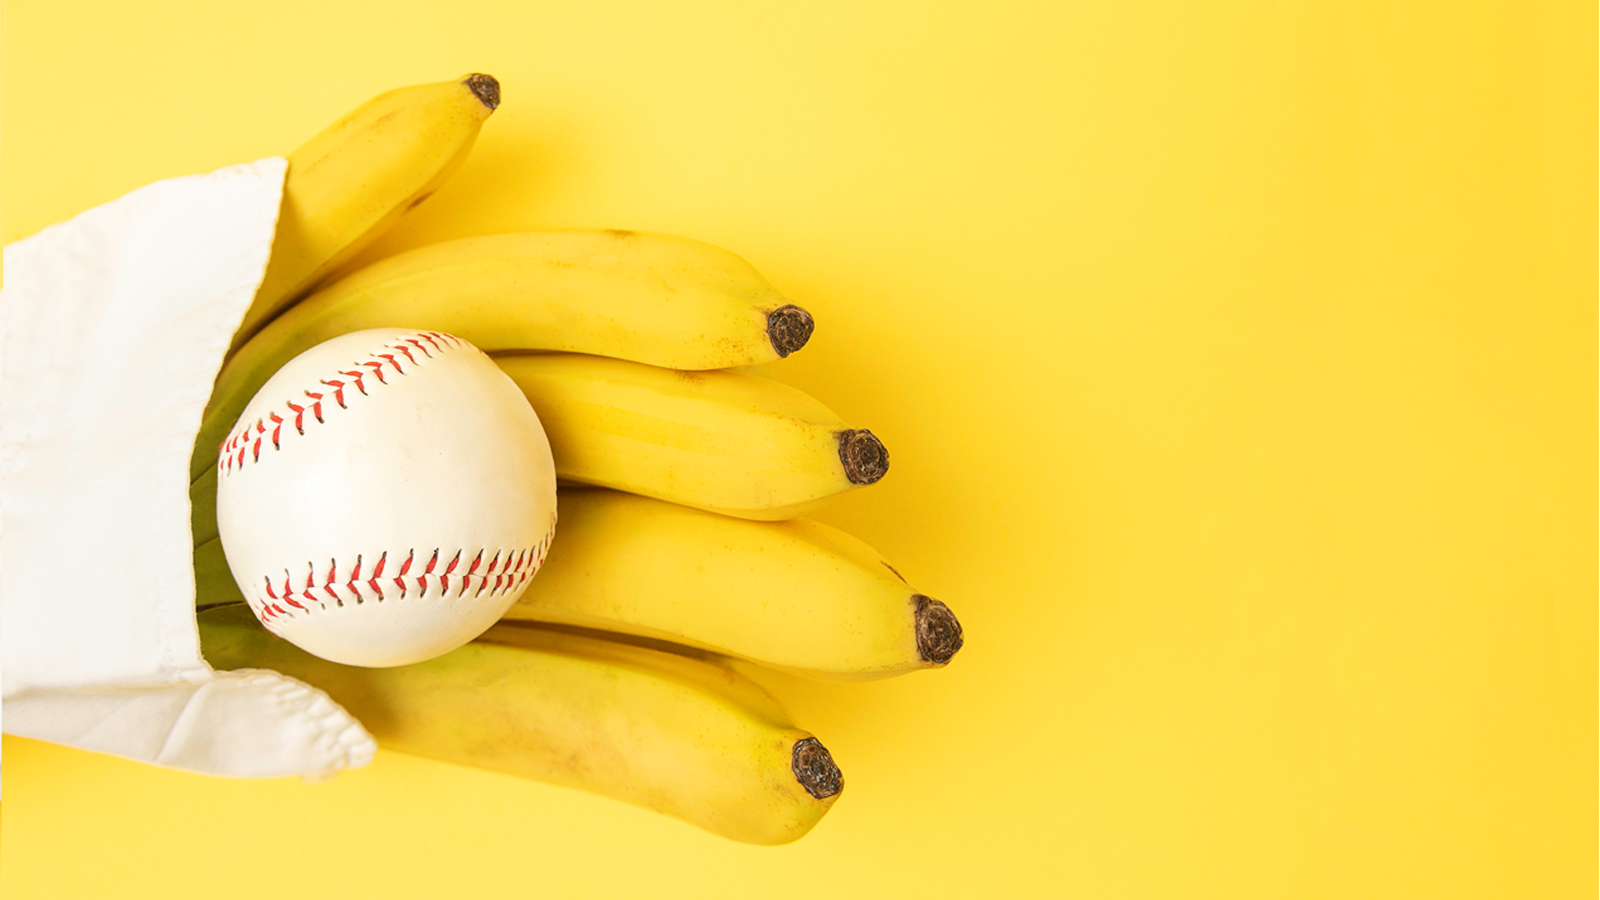 What's Banana Ball? Learn Savannah Banana rules of the game - Los Angeles  Times